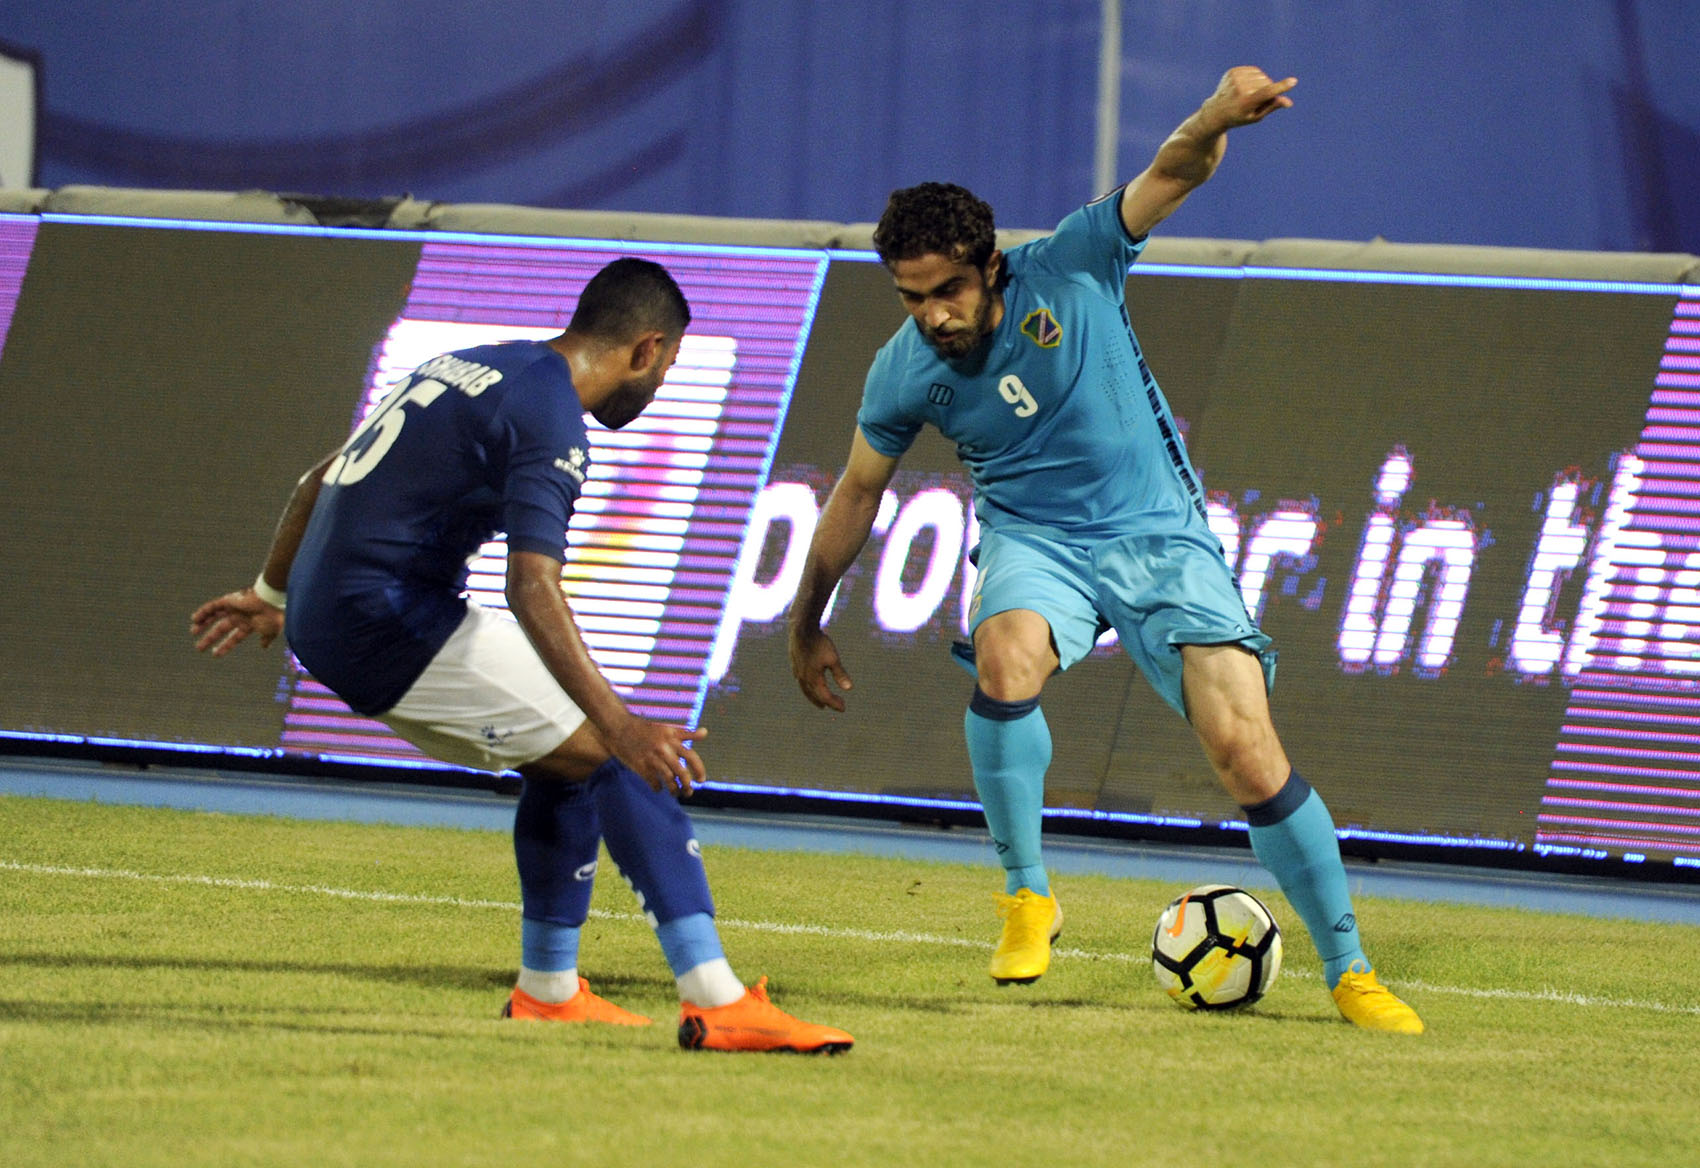 Salmiya player international Al-Khateeb attacks (Shabab) goal